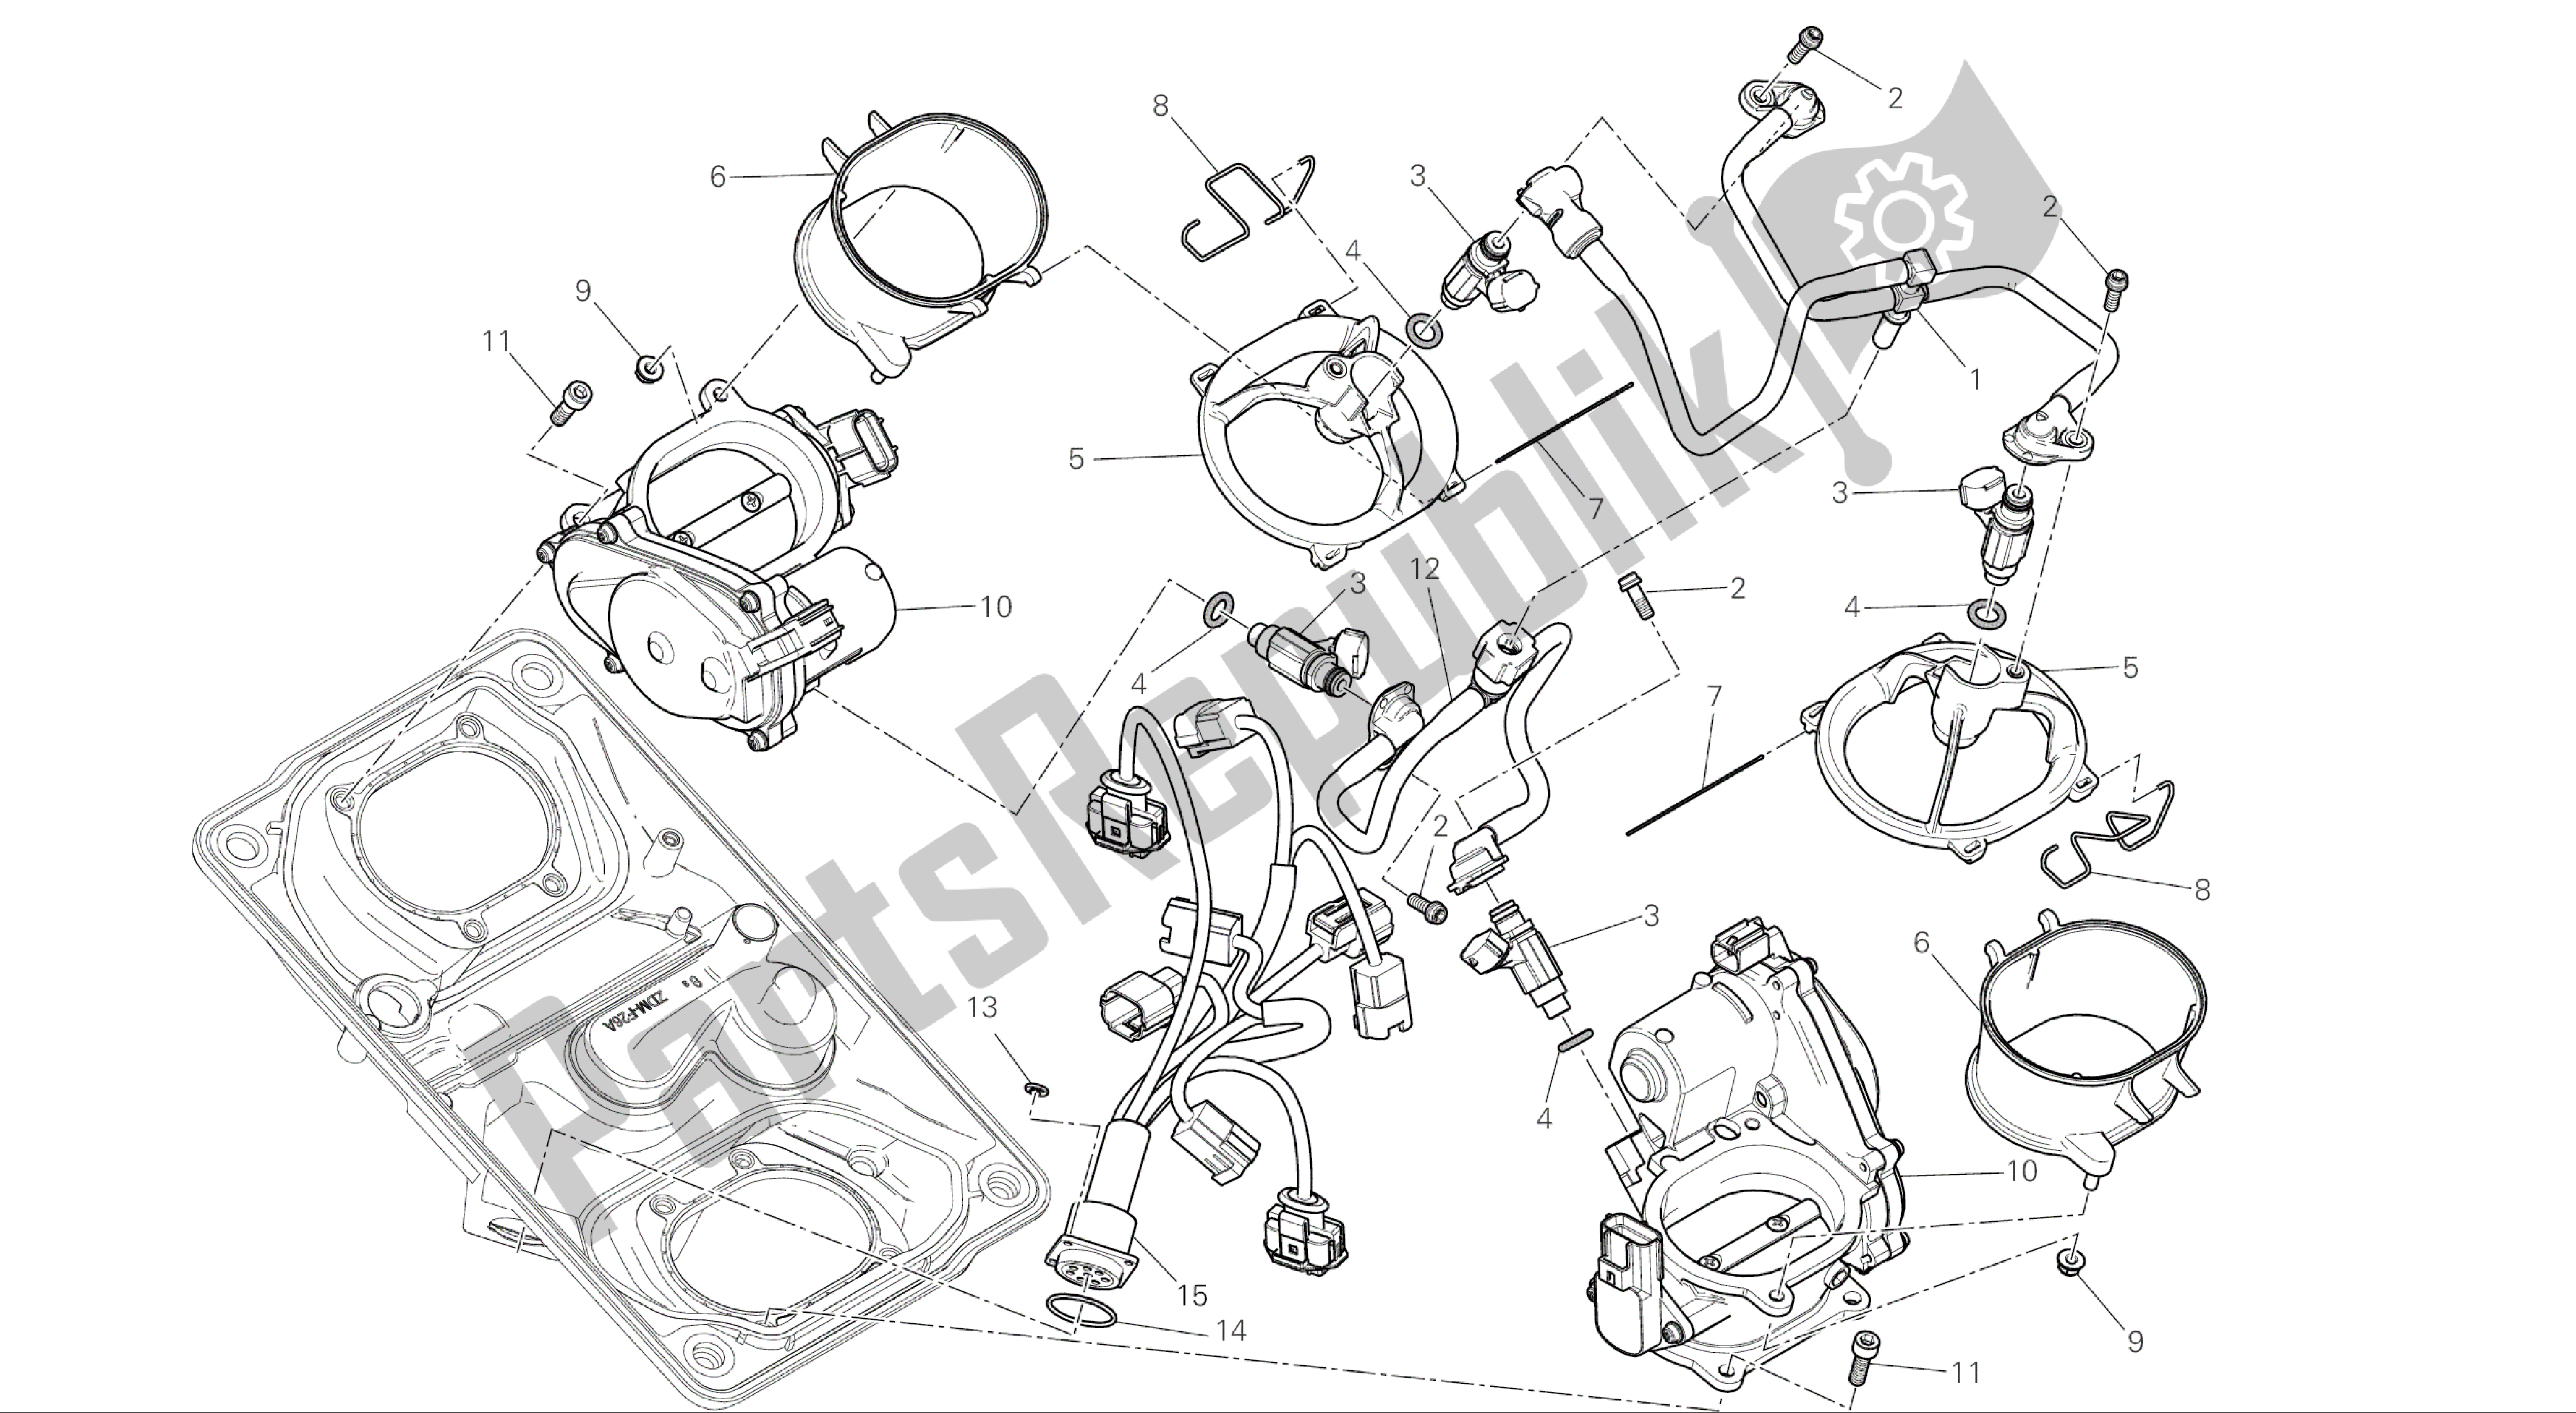 Alle onderdelen voor de Tekening 017 - Gasklephuis [mod: 1299; Xst: Aus, Eur, Fra, Jap, Twn] Groepsframe van de Ducati Panigale ABS 1299 2016